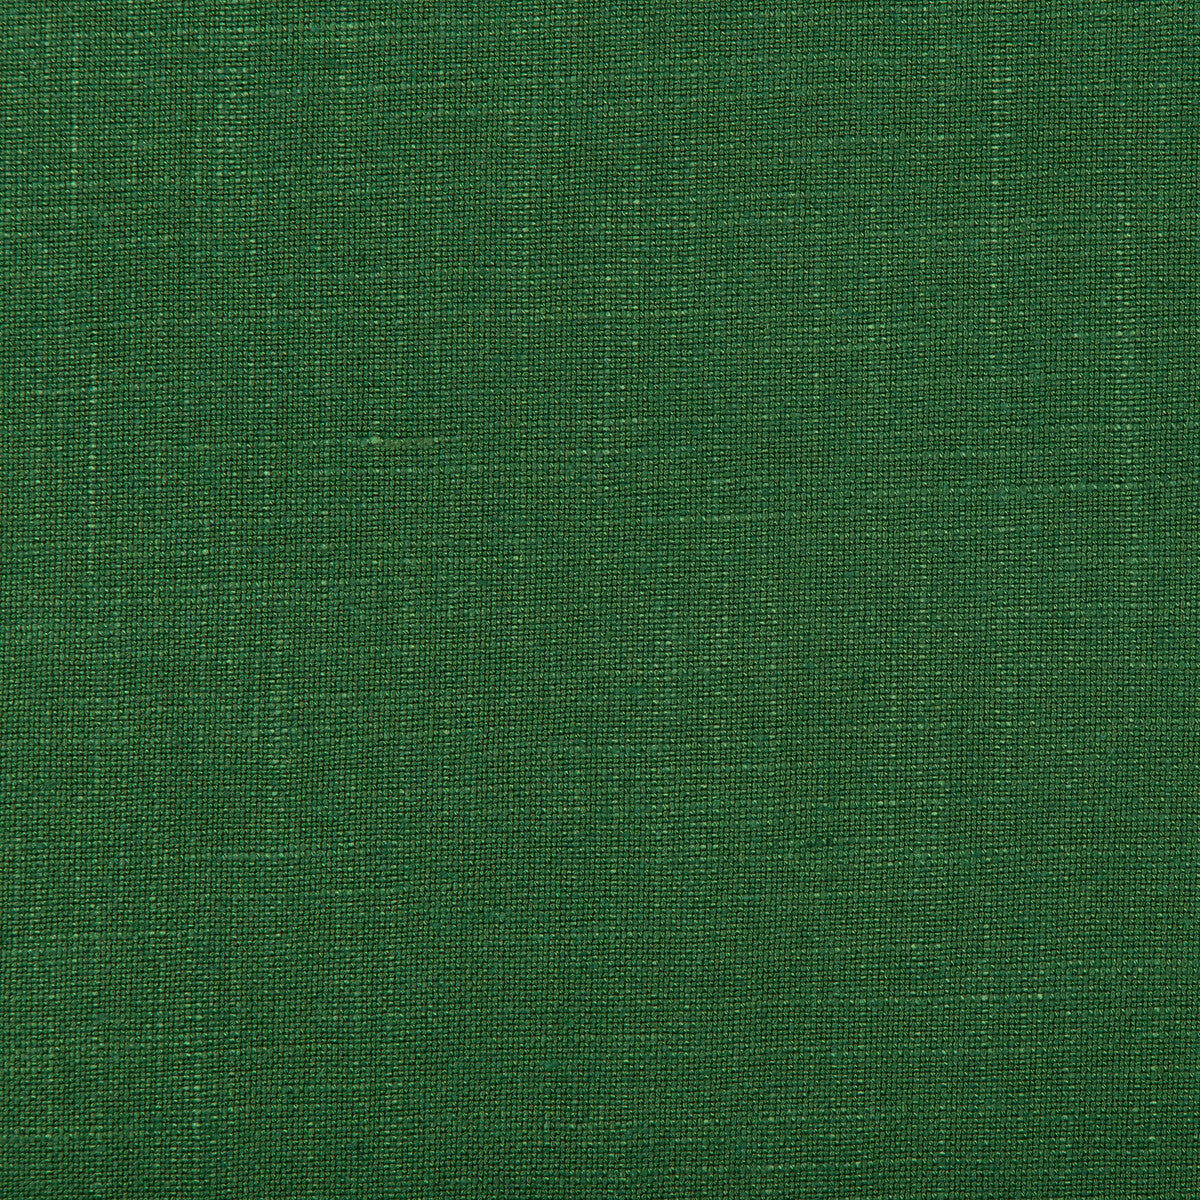 Aura fabric in cilantro color - pattern 35520.3.0 - by Kravet Design